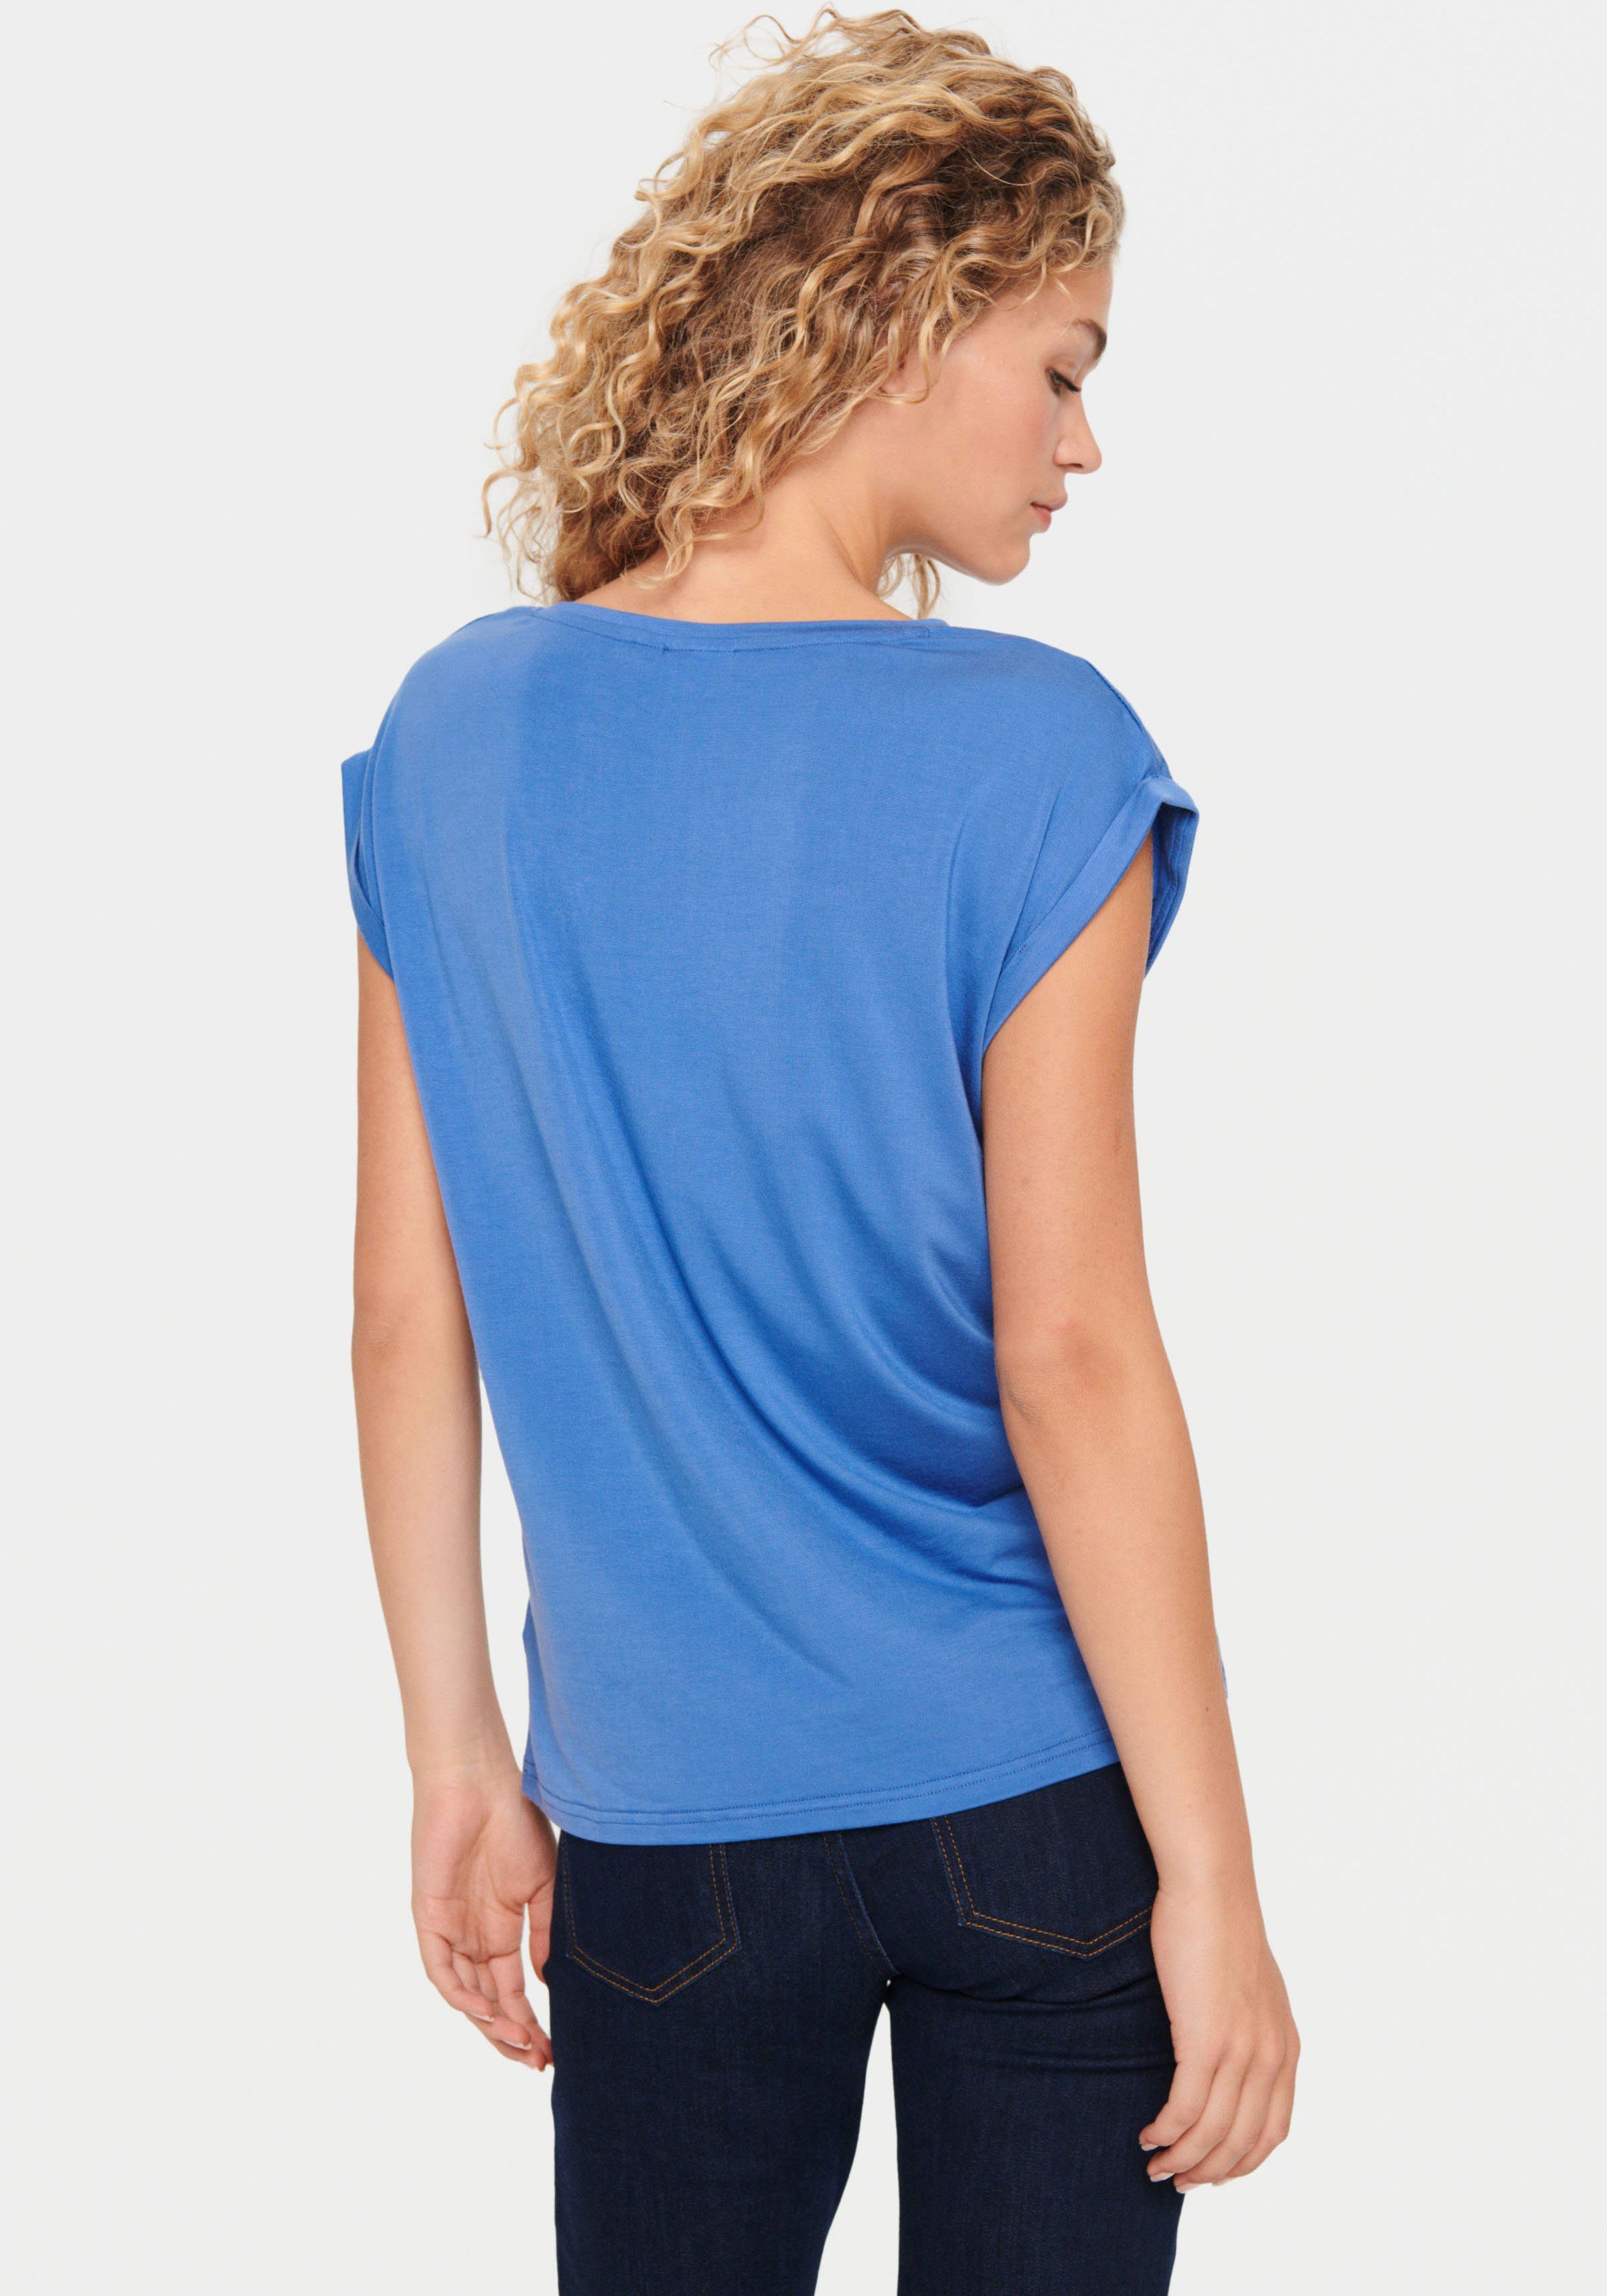 Saint Tropez Kurzarmshirt T-Shirt Blue Dutch U1520, AdeliaSZ